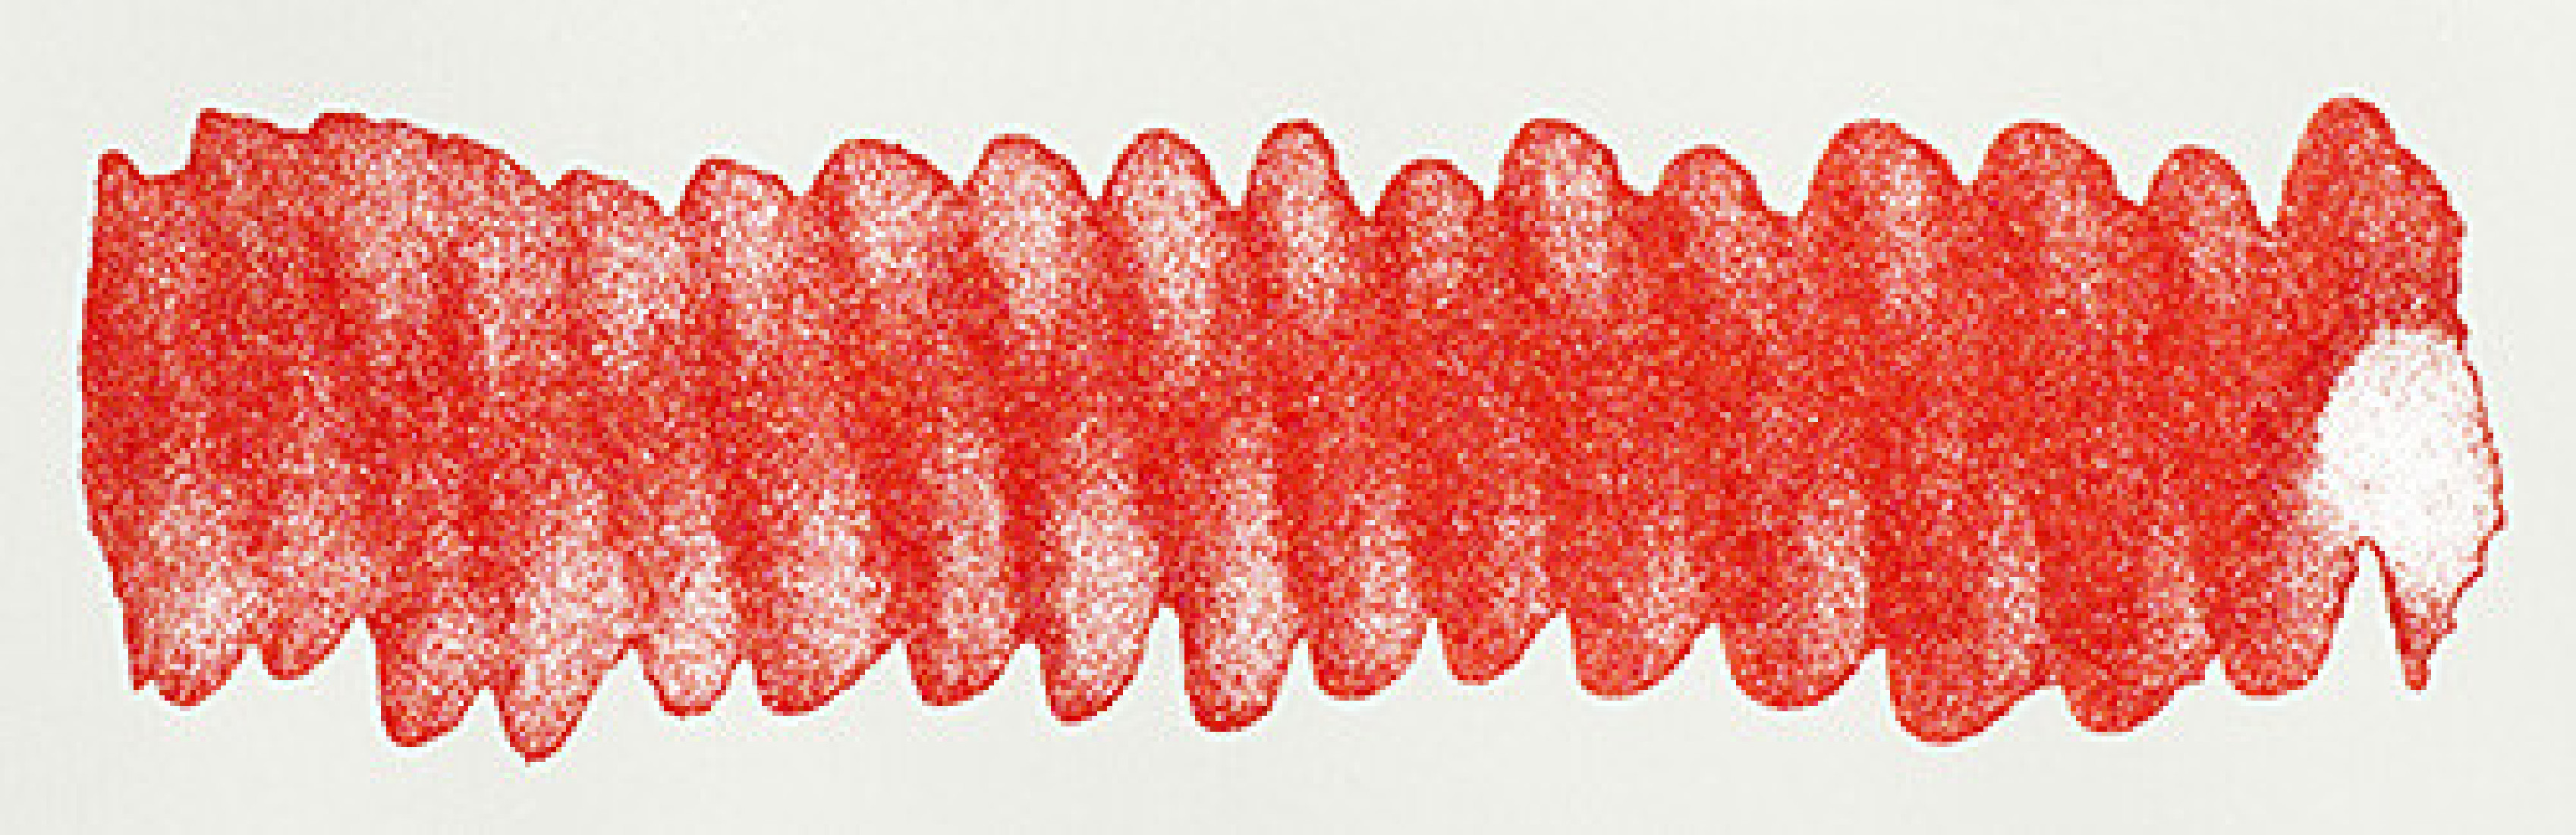 Diamine 50ml Firestorm red Fountain pen shimmer ink